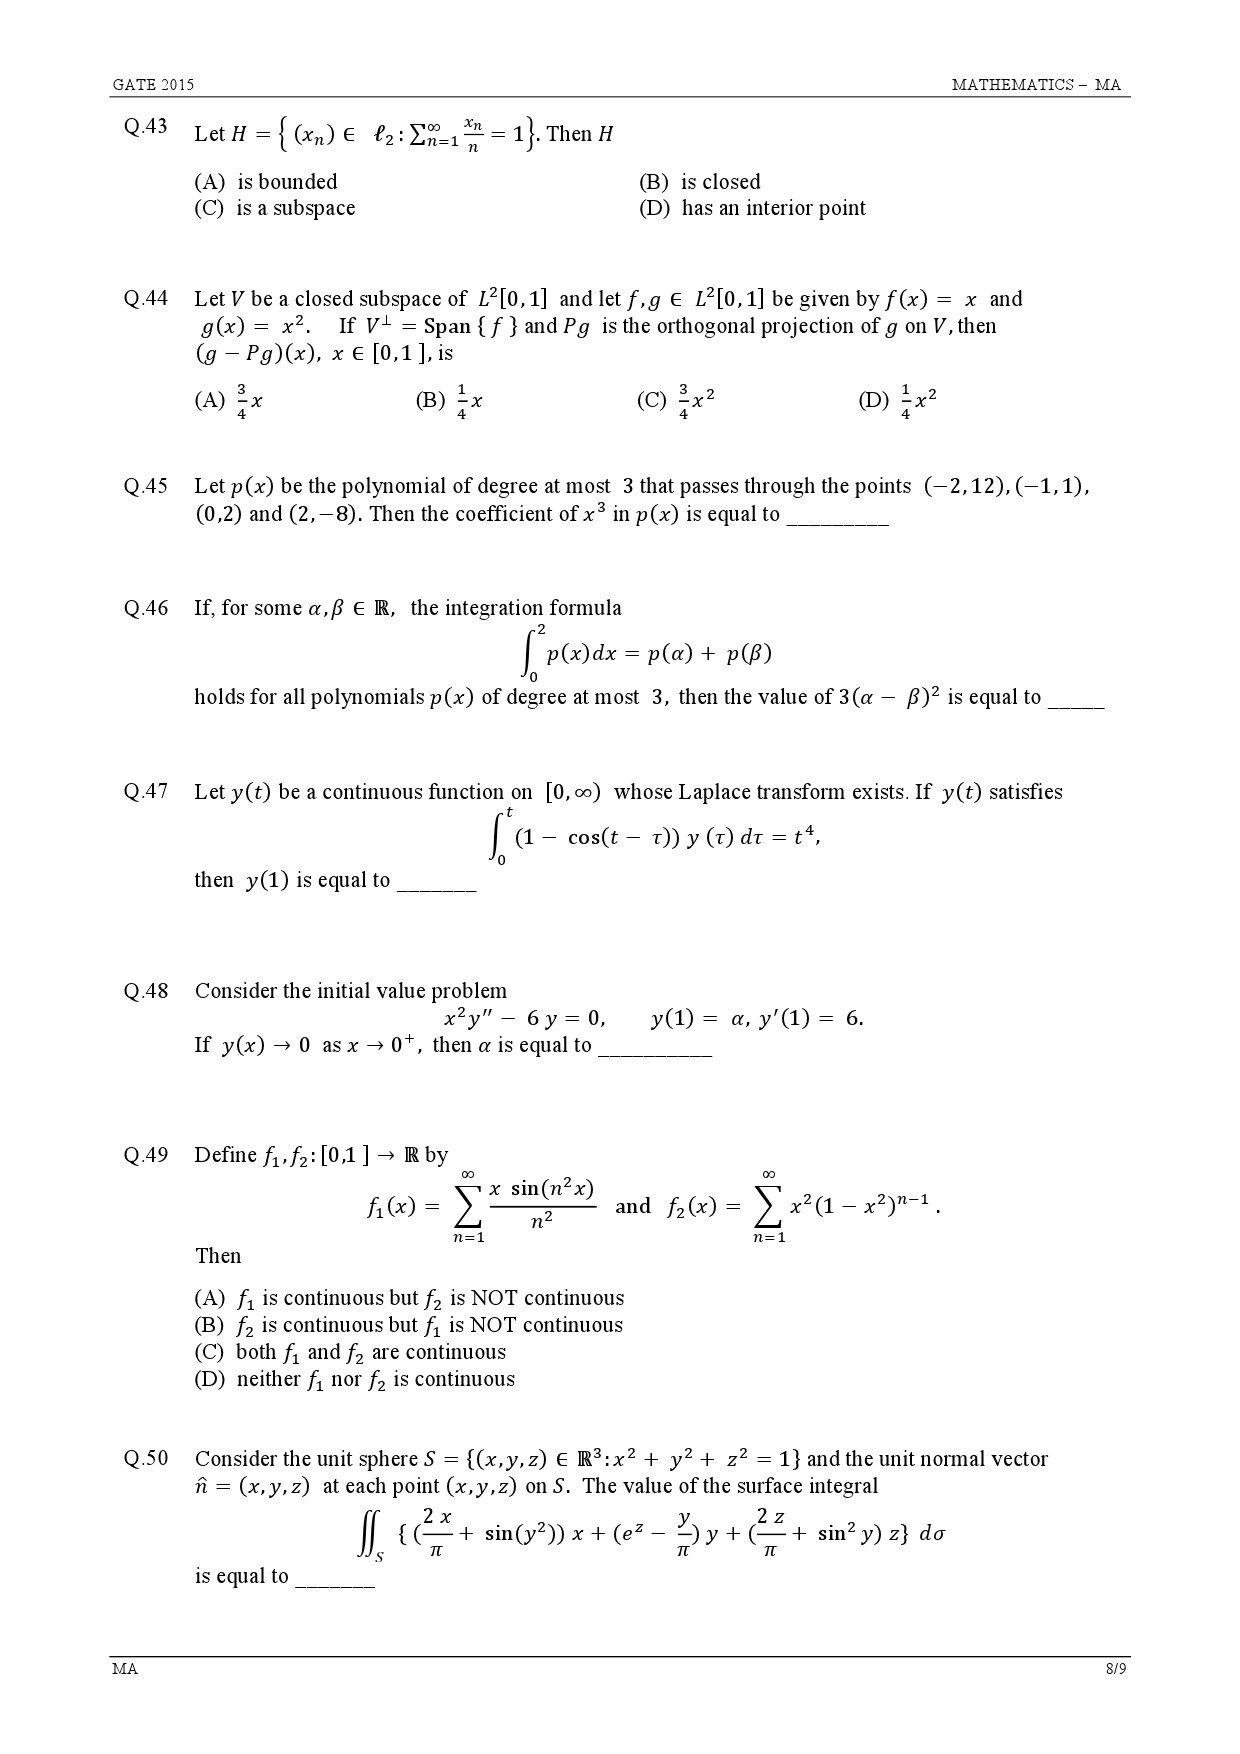 GATE Exam Question Paper 2015 Mathematics 8